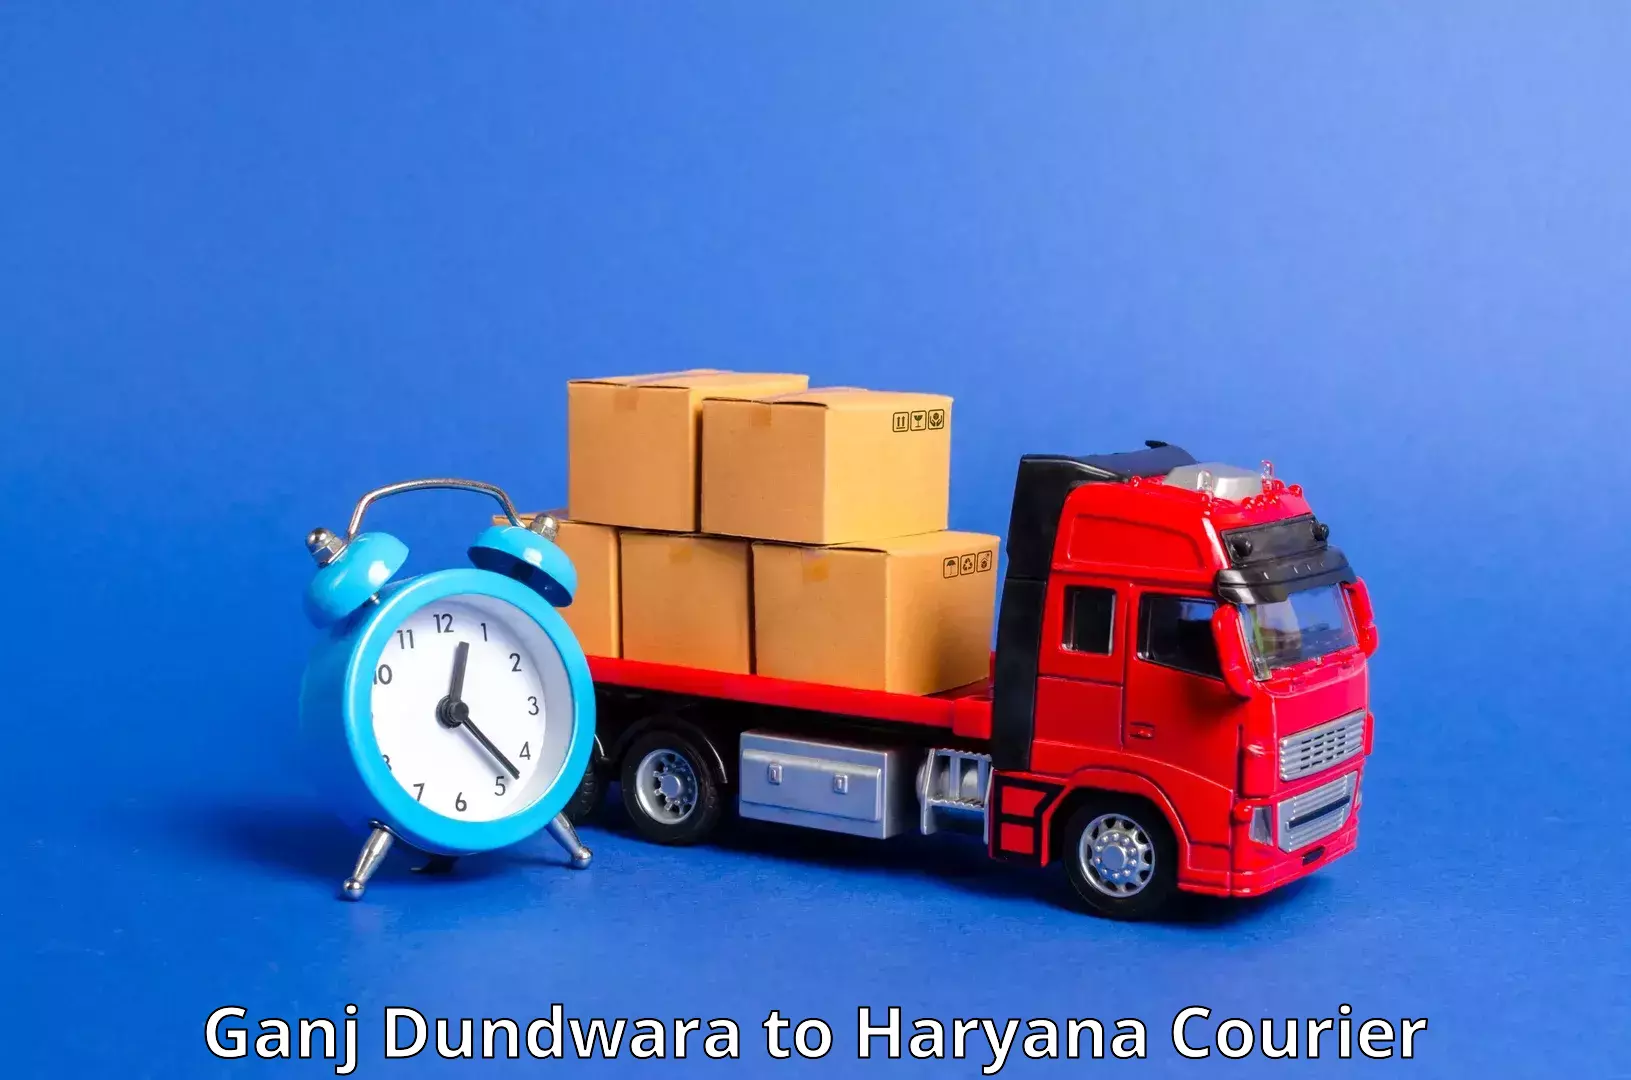 Courier service partnerships Ganj Dundwara to Charkhari